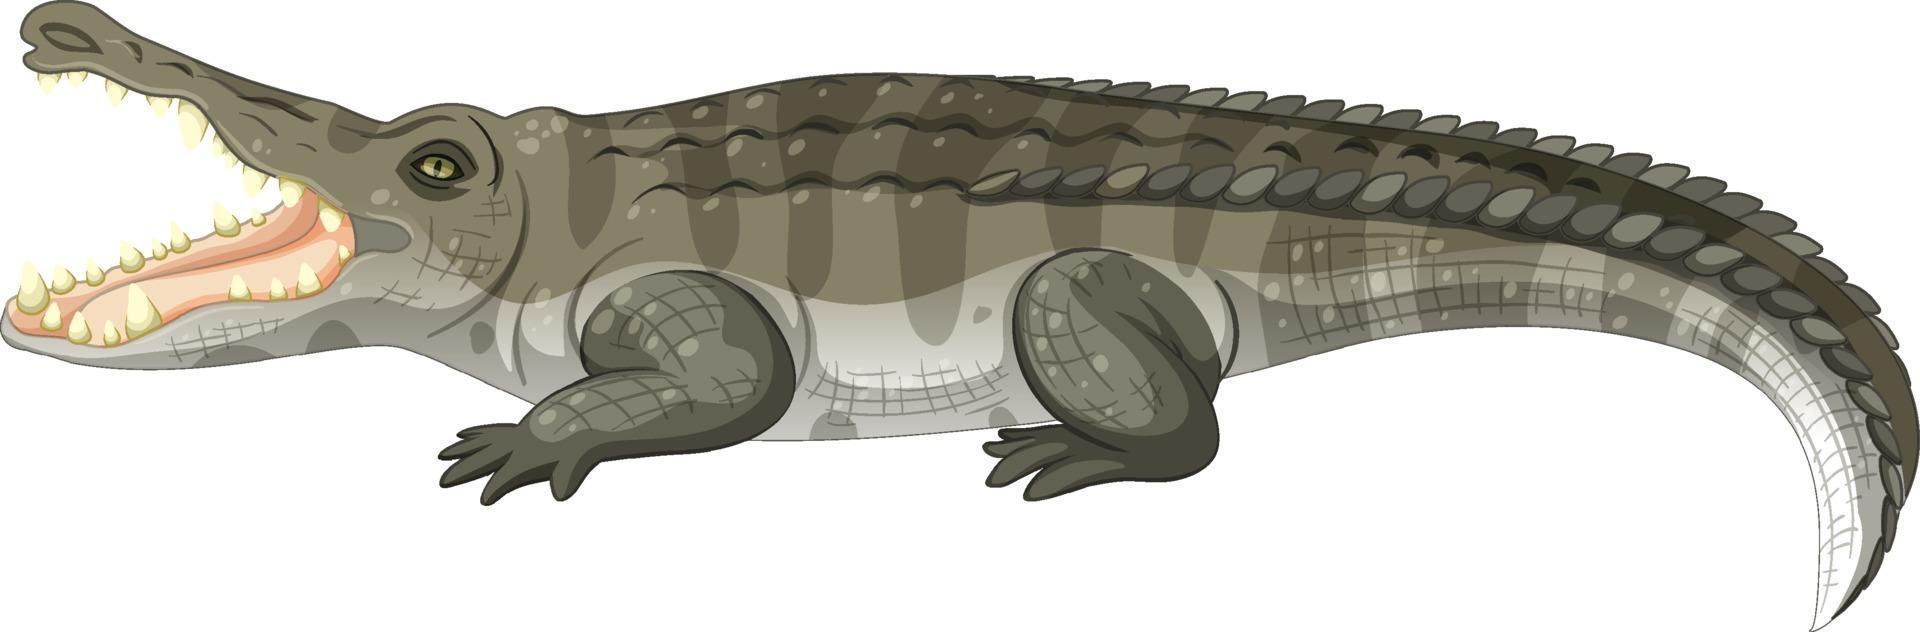 crocodilo adulto isolado no fundo branco vetor